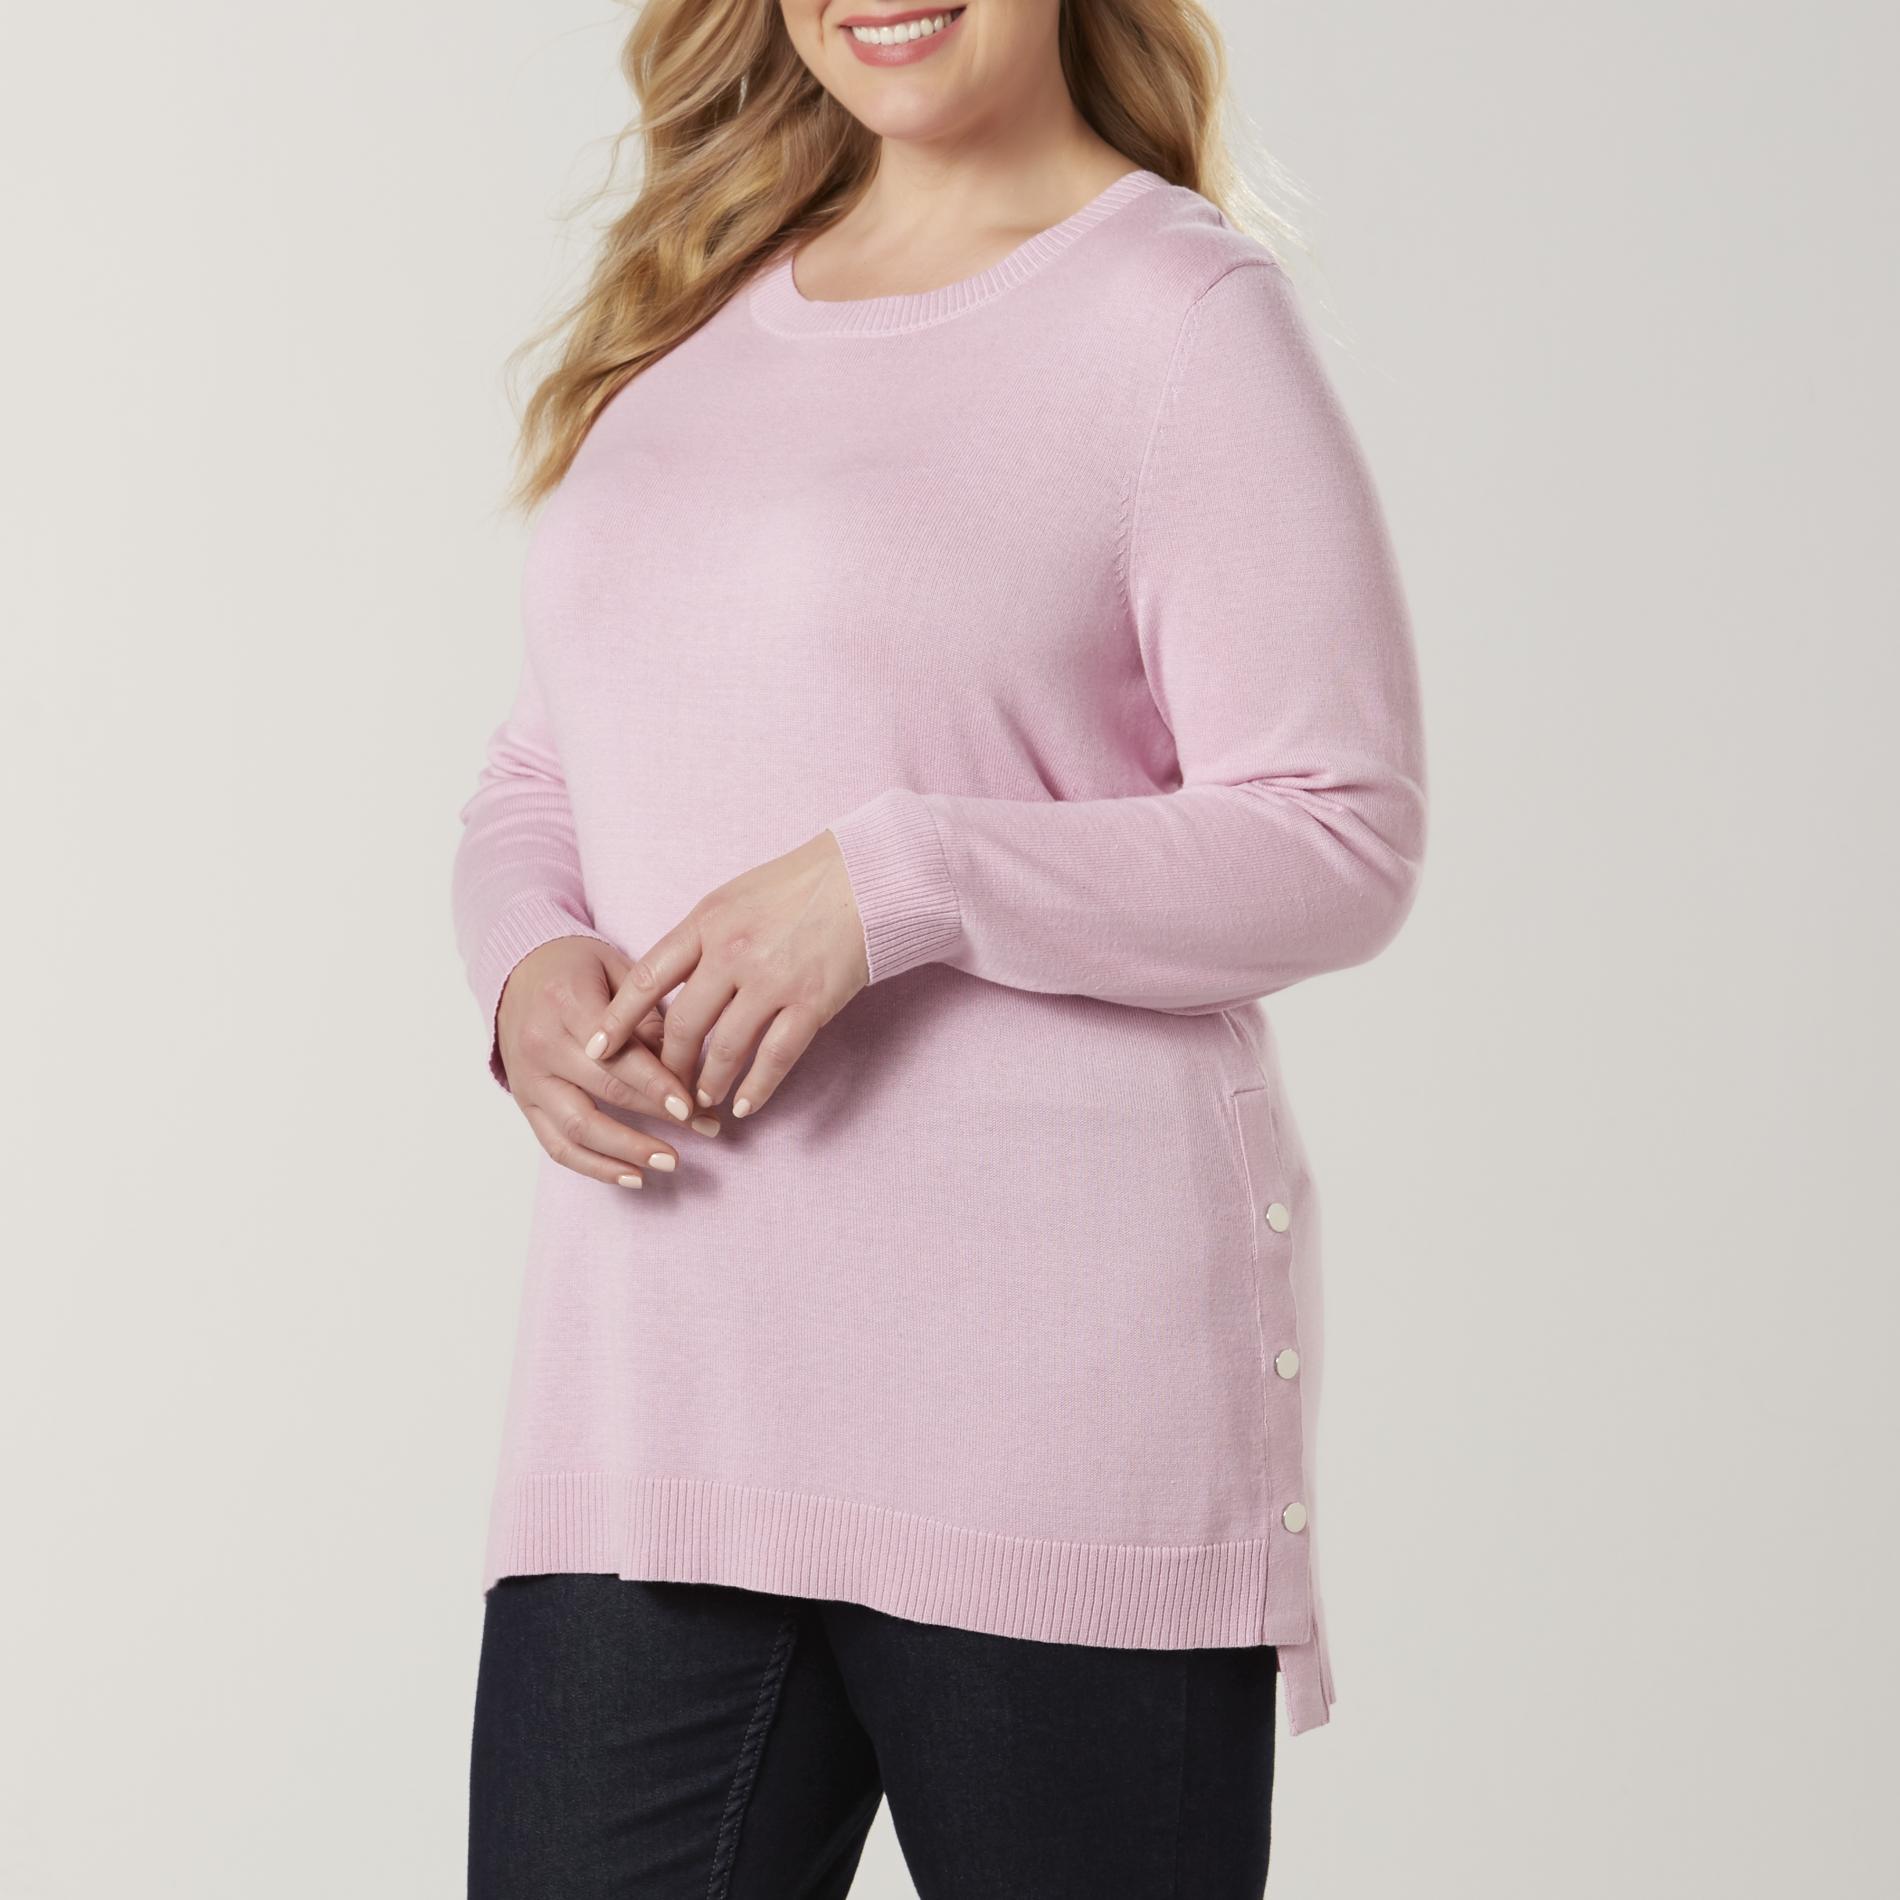 Simply Emma Women's Plus Embellished Sweater